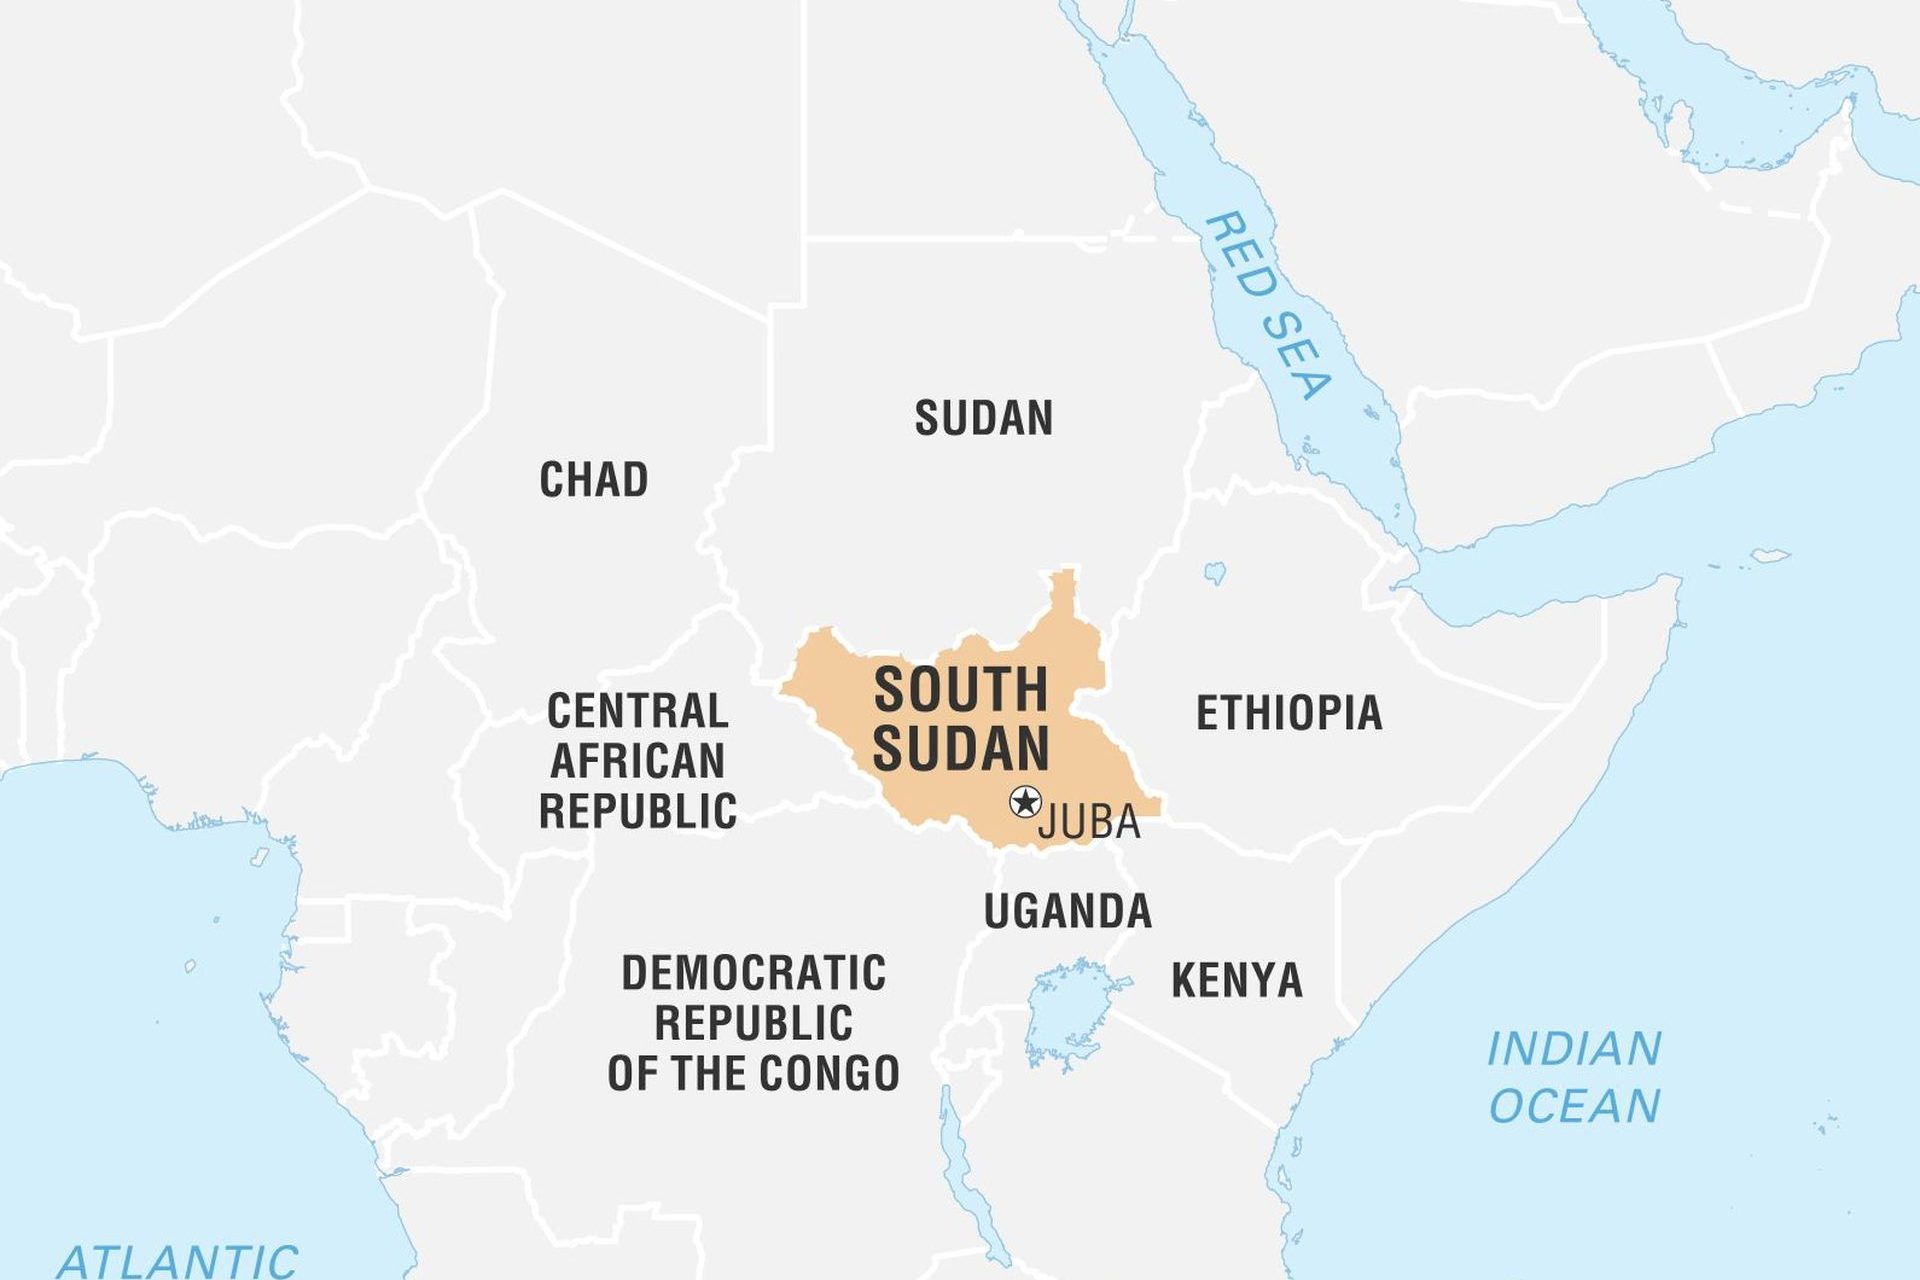 South Sudan: 56.51 years